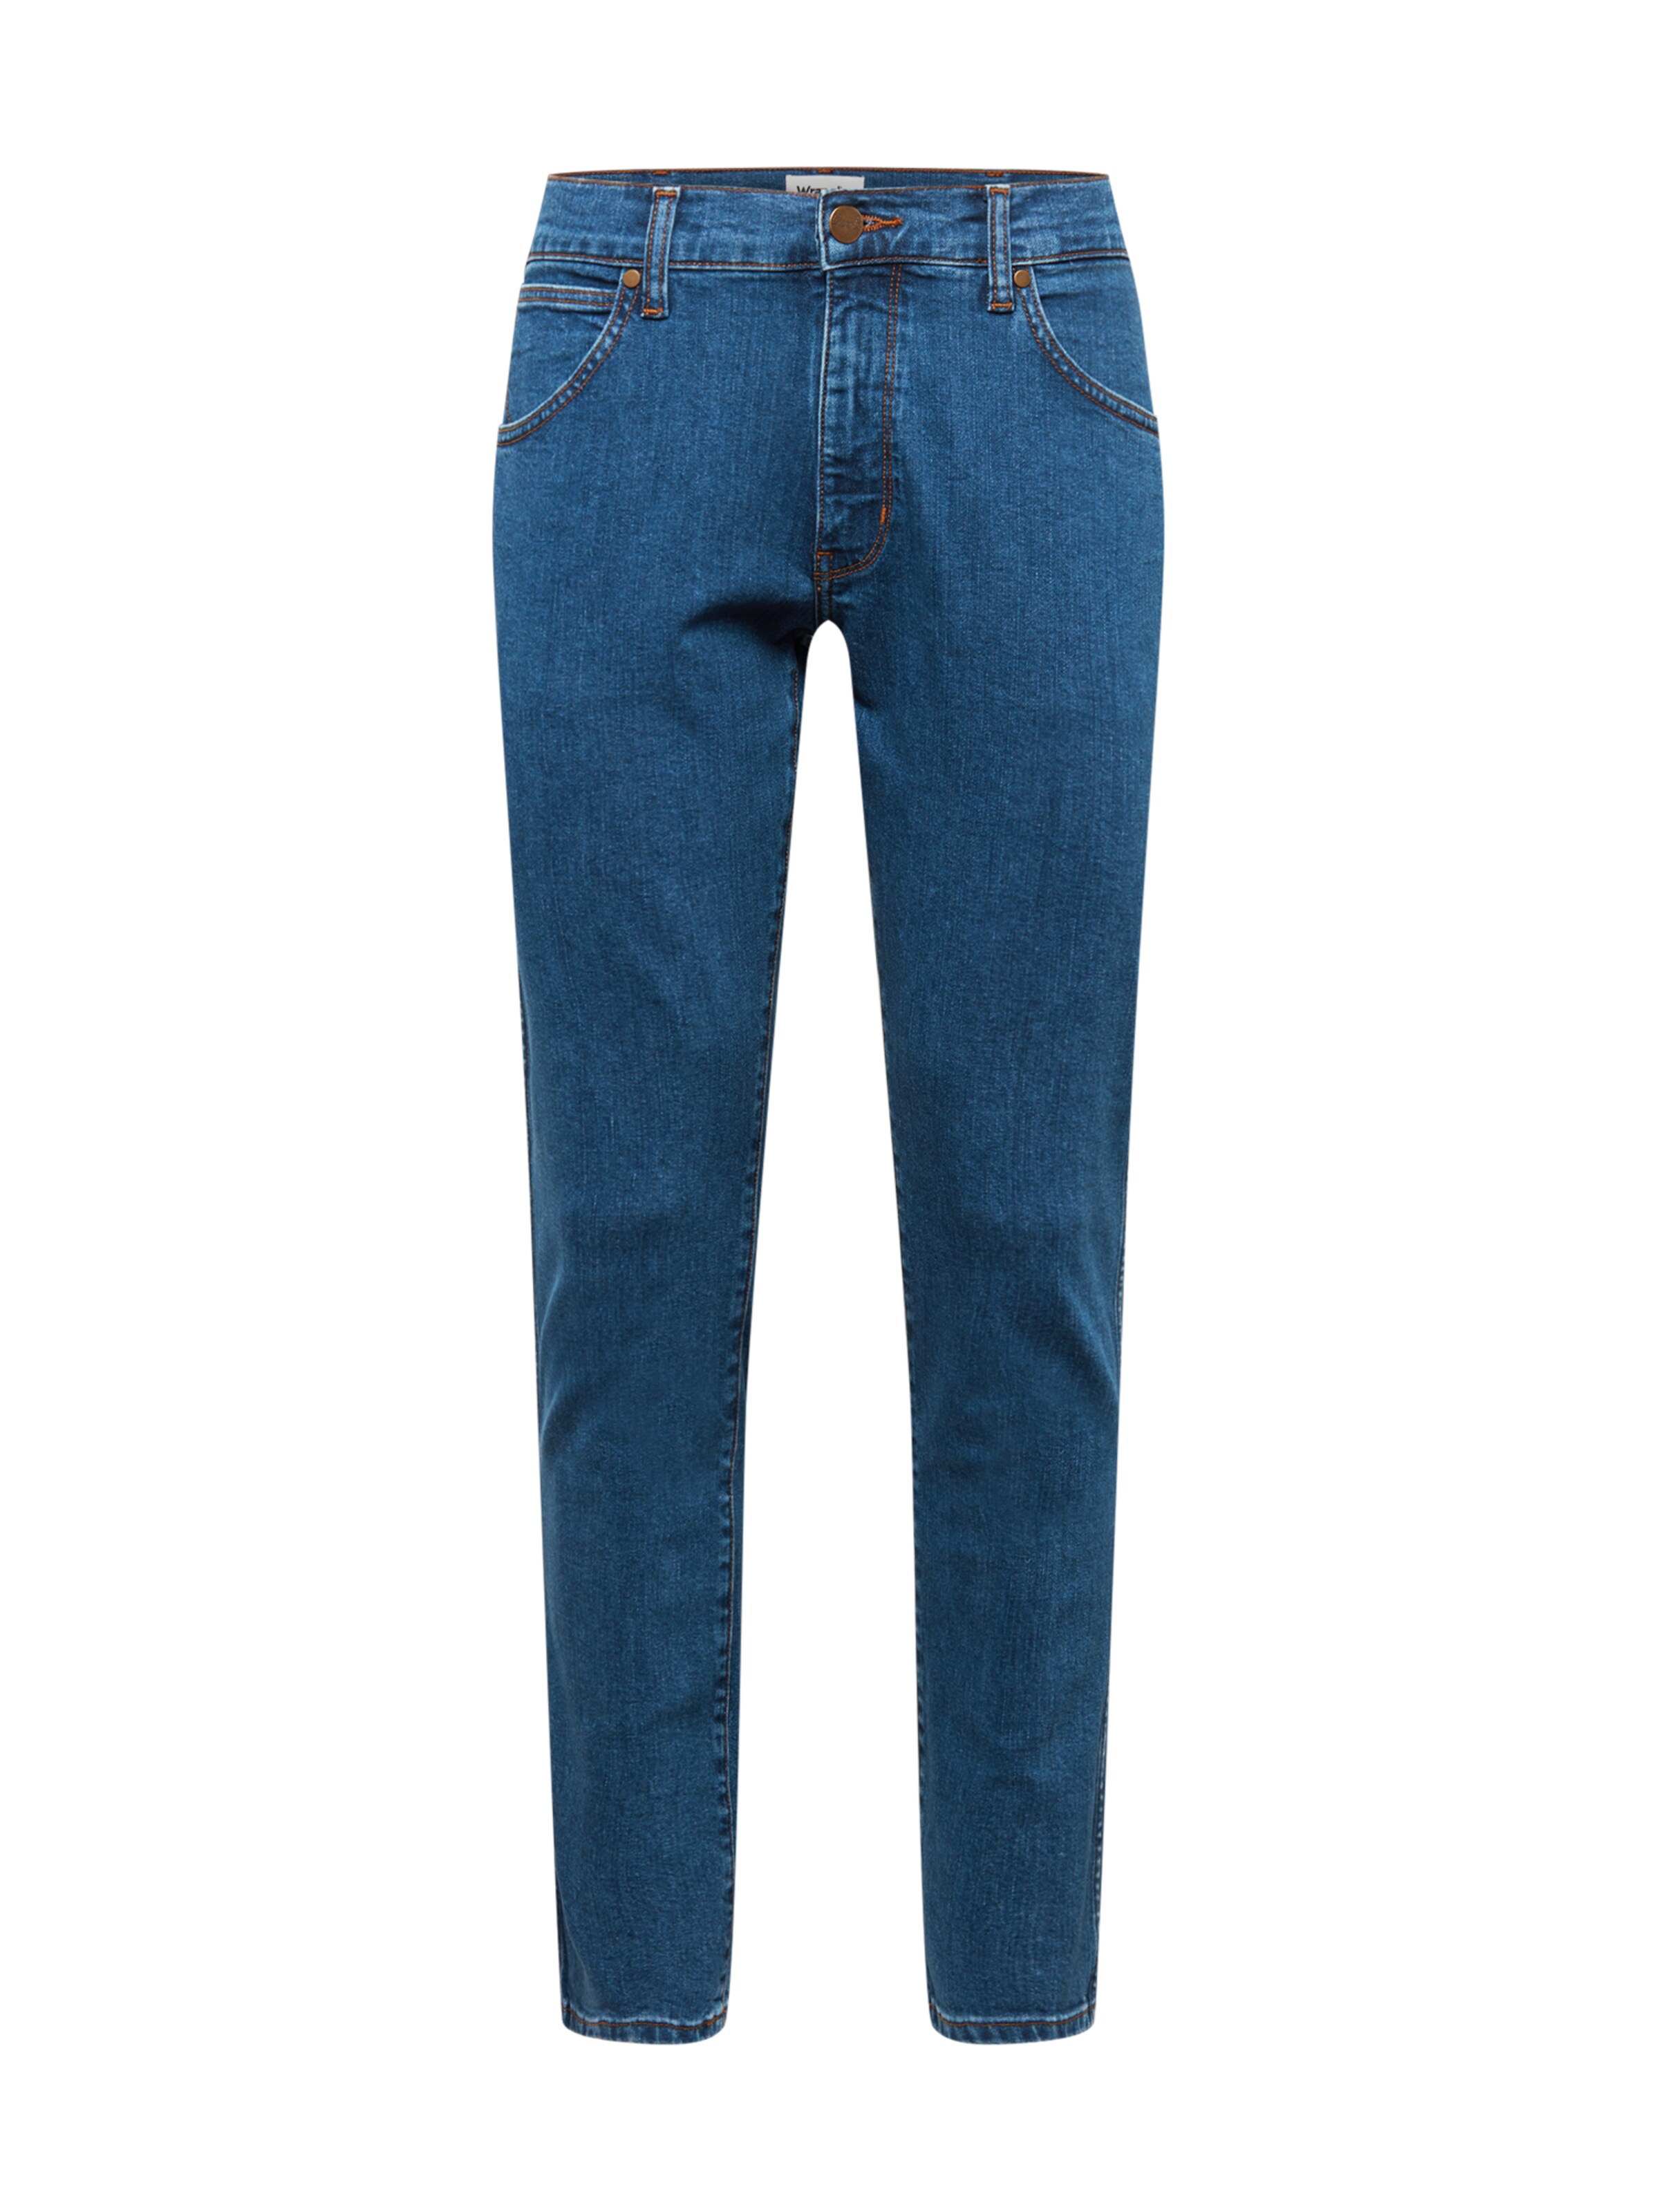 Abbigliamento Uomo WRANGLER Jeans LARSTON in Blu 